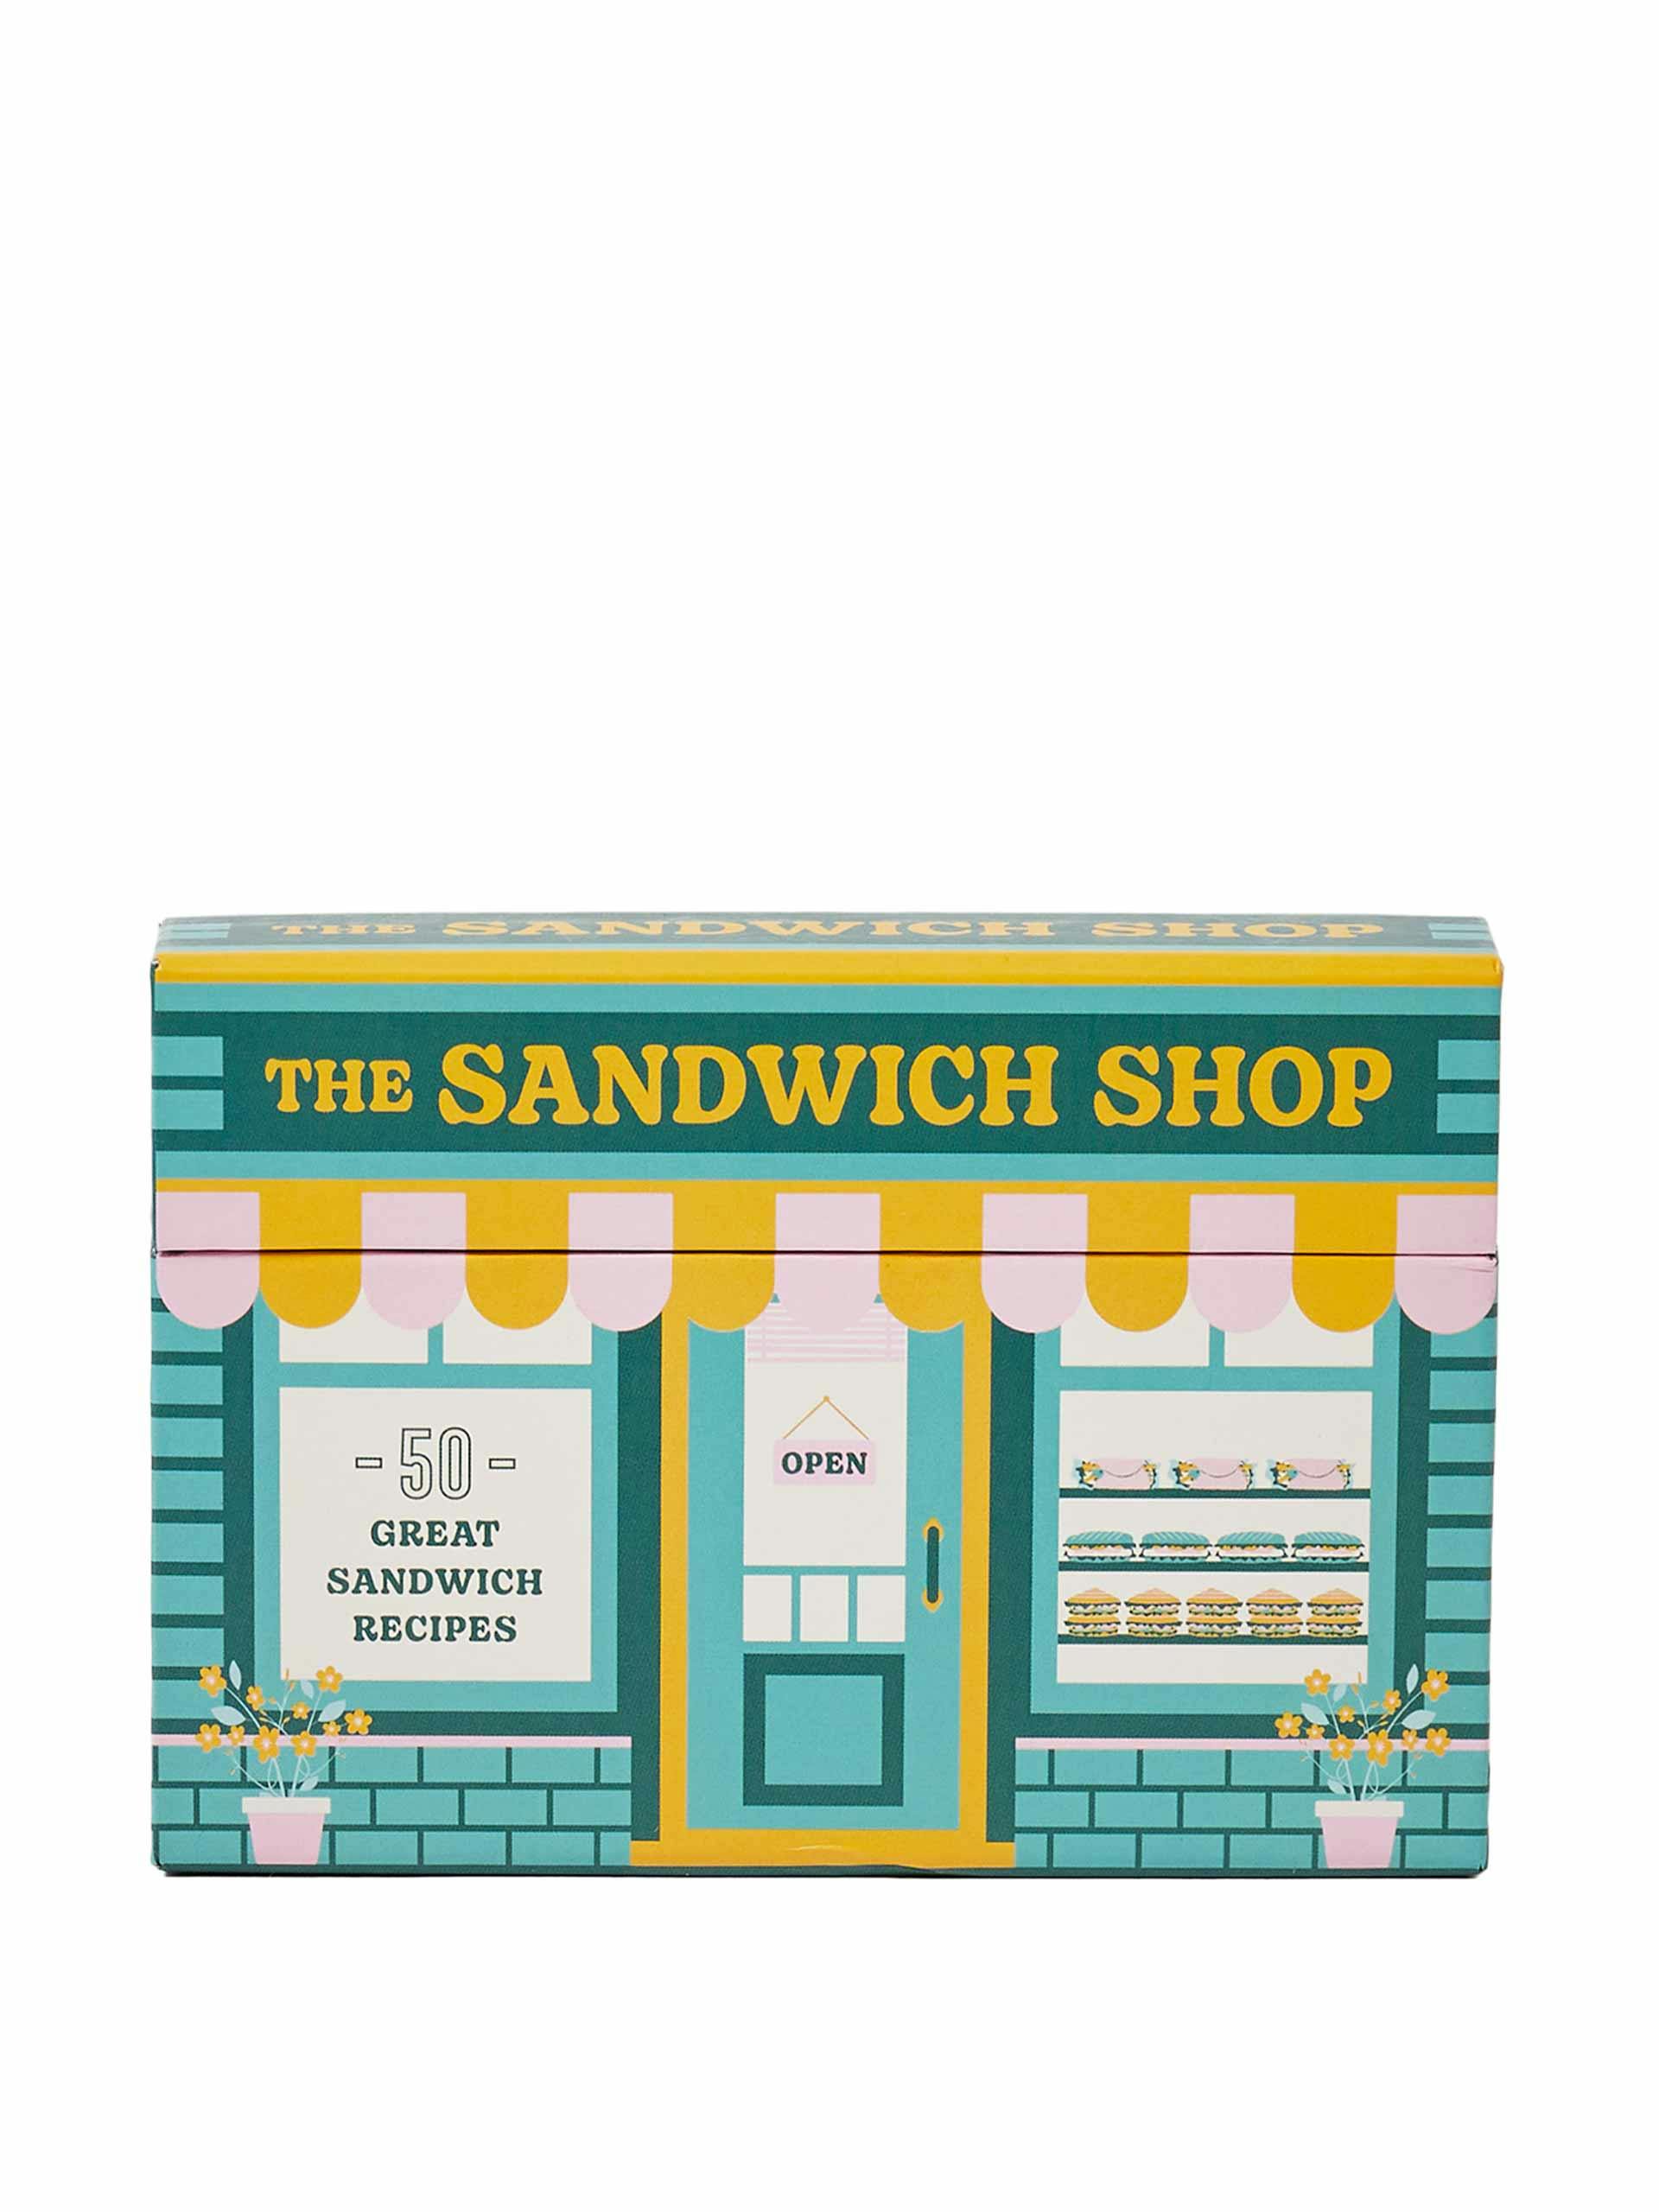 The sandwich shop recipe cards